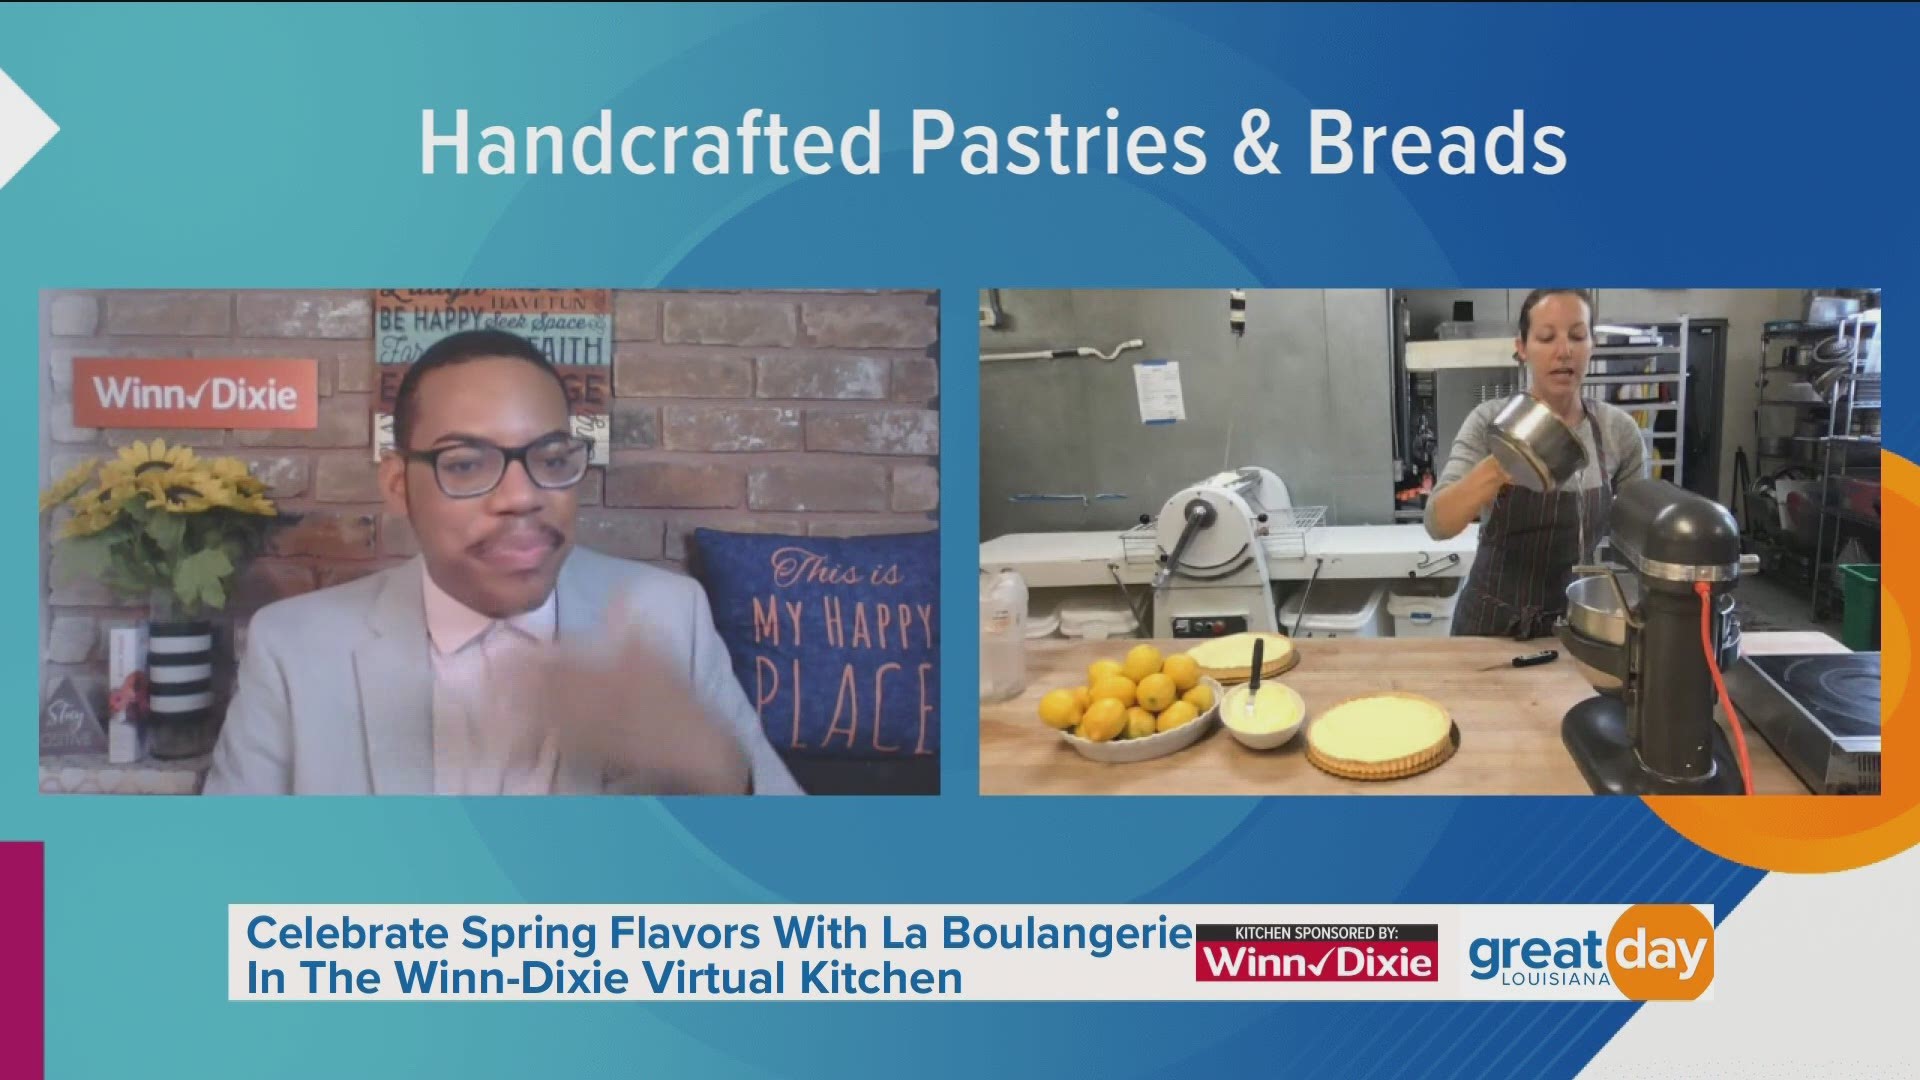 A pastry chef and partner at La Boulangerie prepared a lemon meringue pie in the Winn-Dixie virtual kitchen.